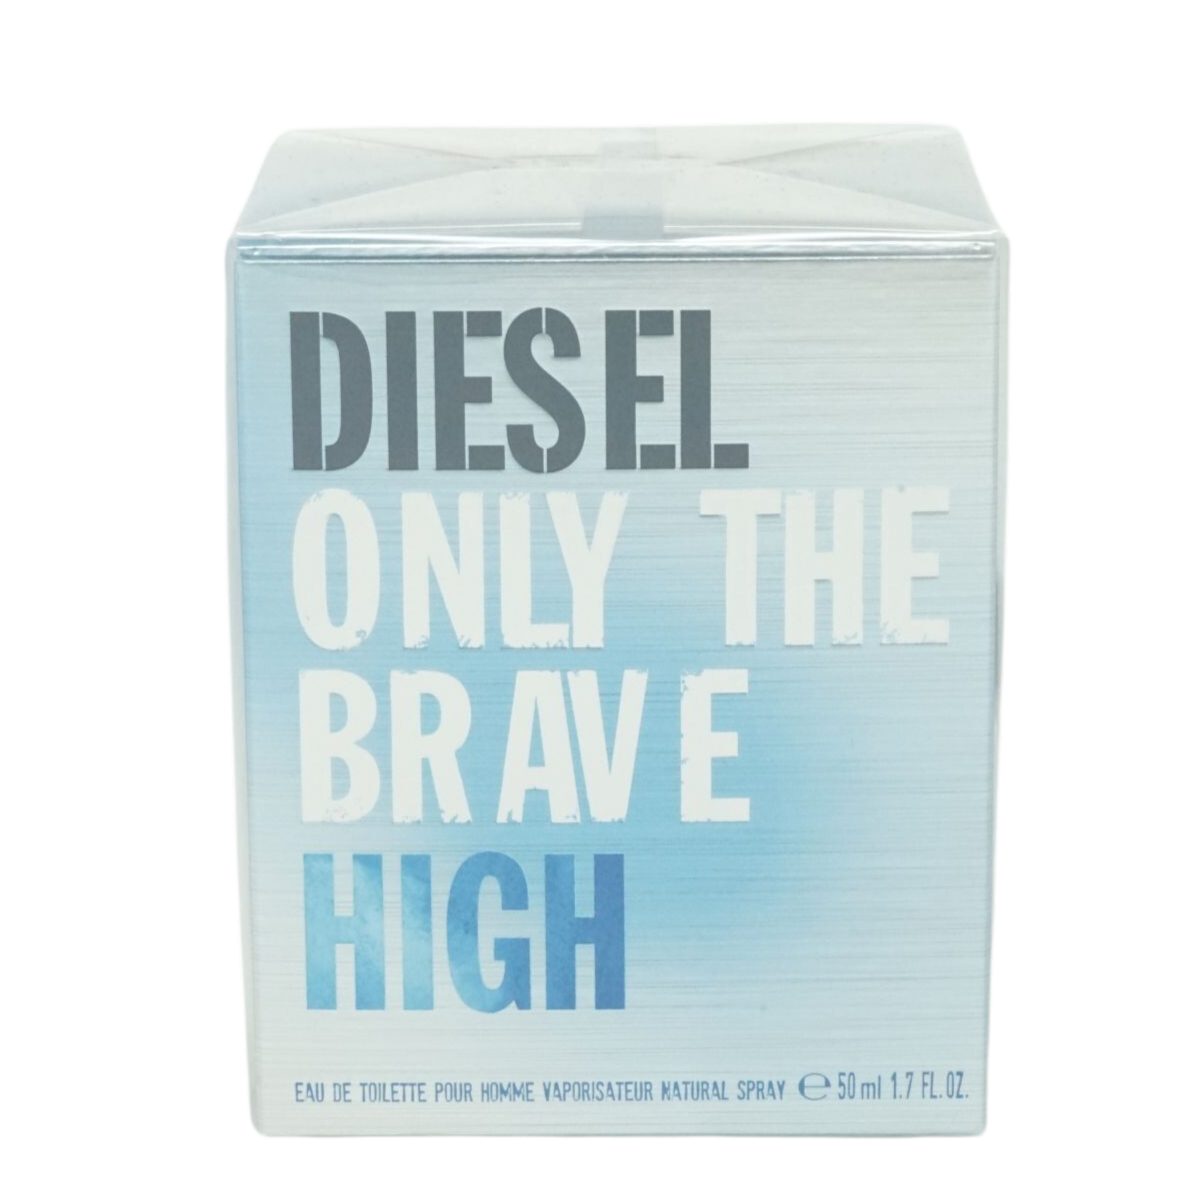 Diesel Duschpflege Diesel Only The 50ml High Brave de Spray Toilette Eau